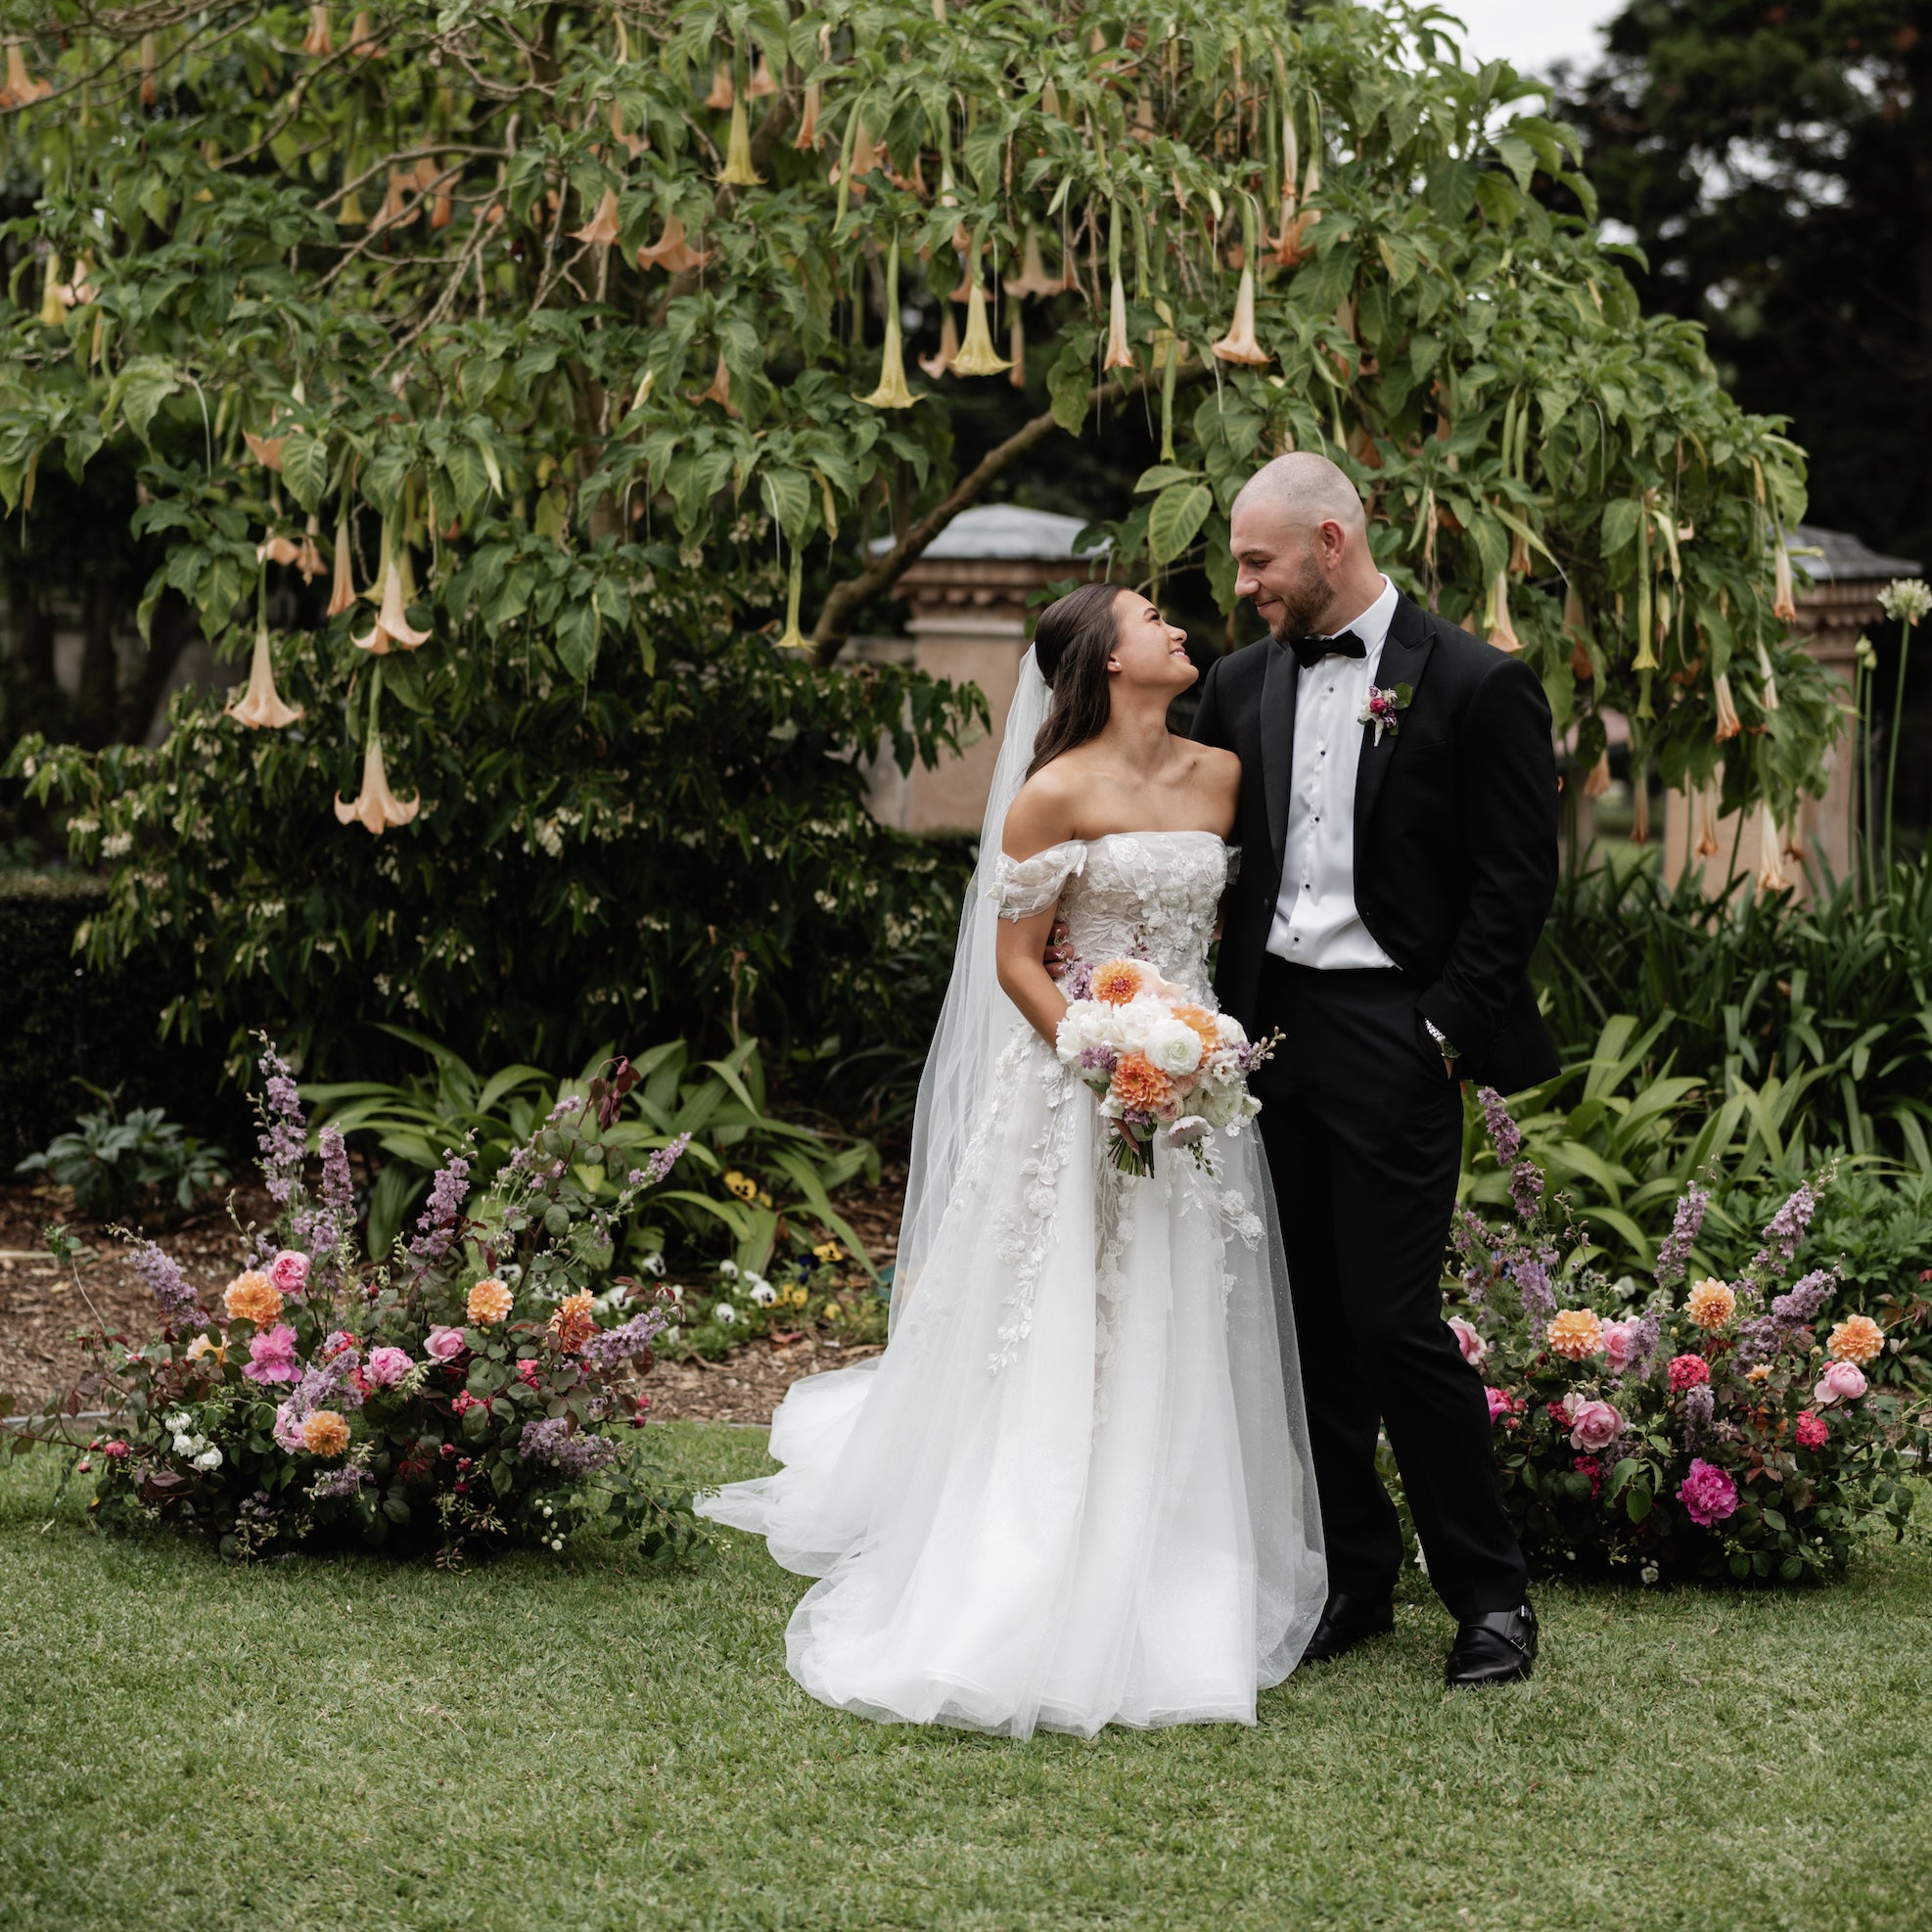 Why Choose an Eco-Conscious Wedding Florist?